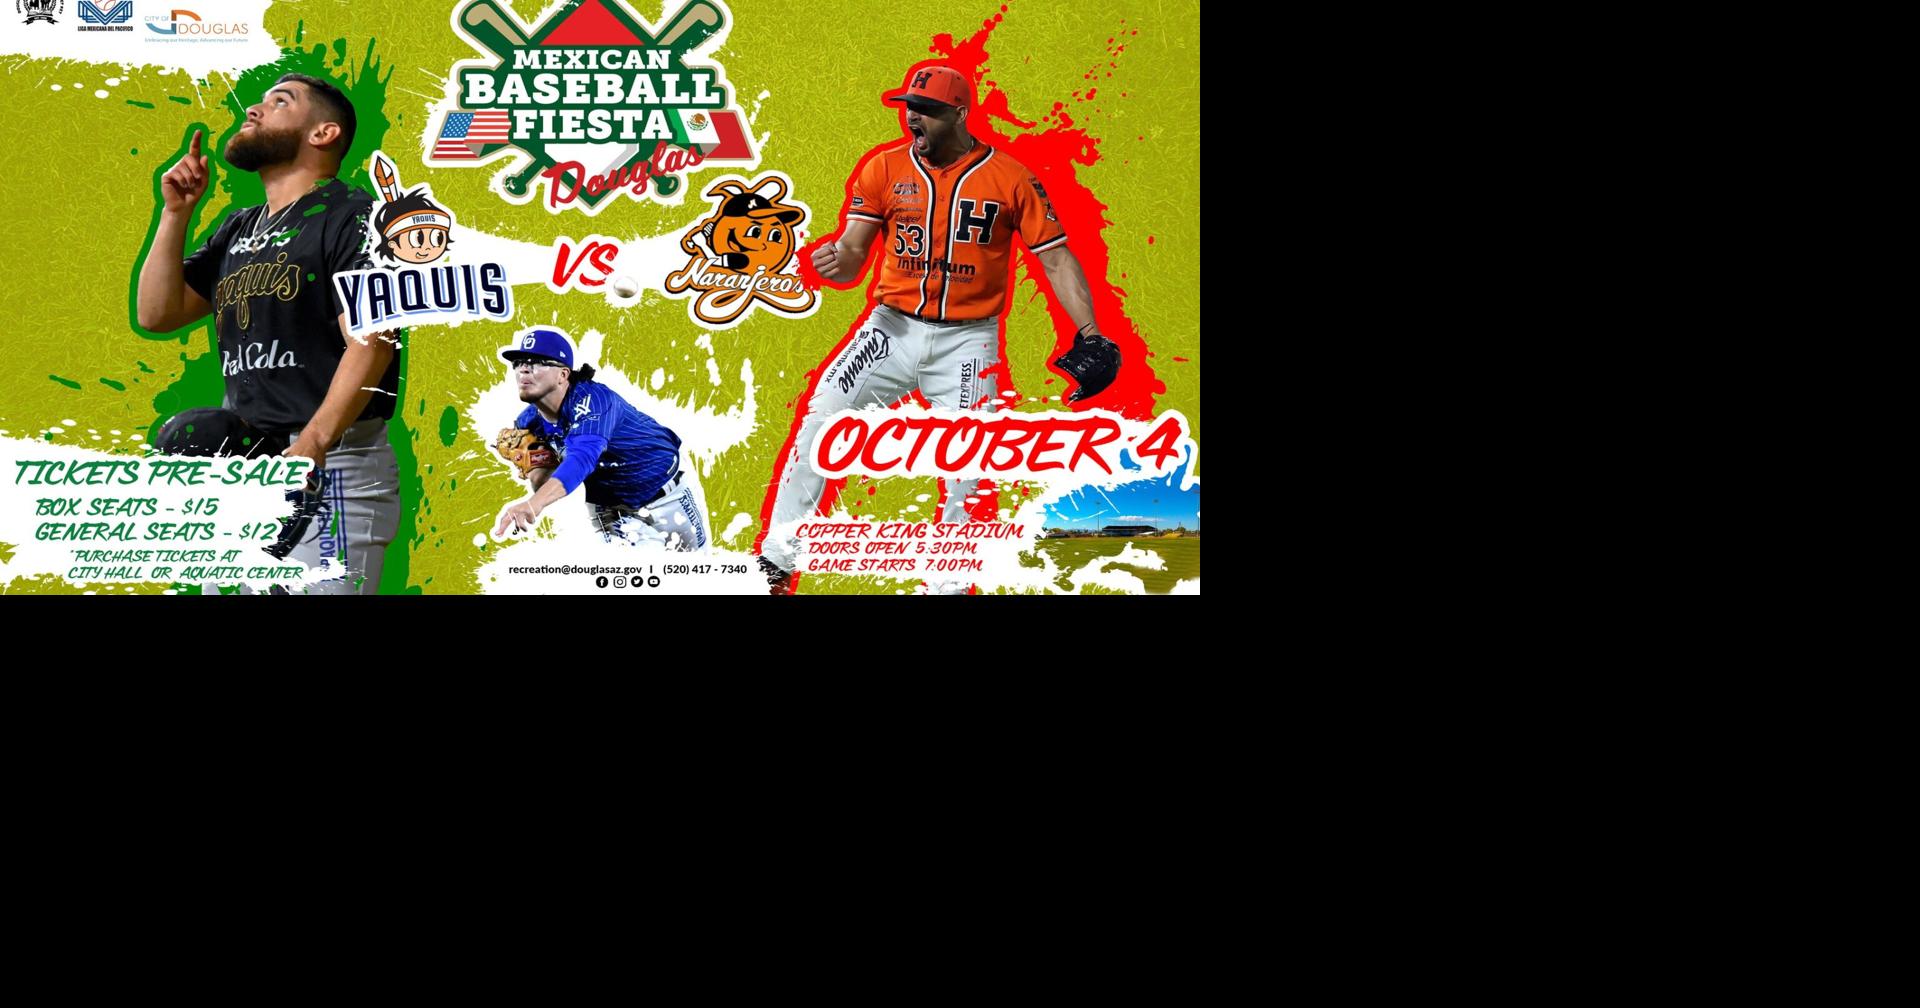 Tickets on sale for Mexican Baseball Fiesta in Douglas, Sports